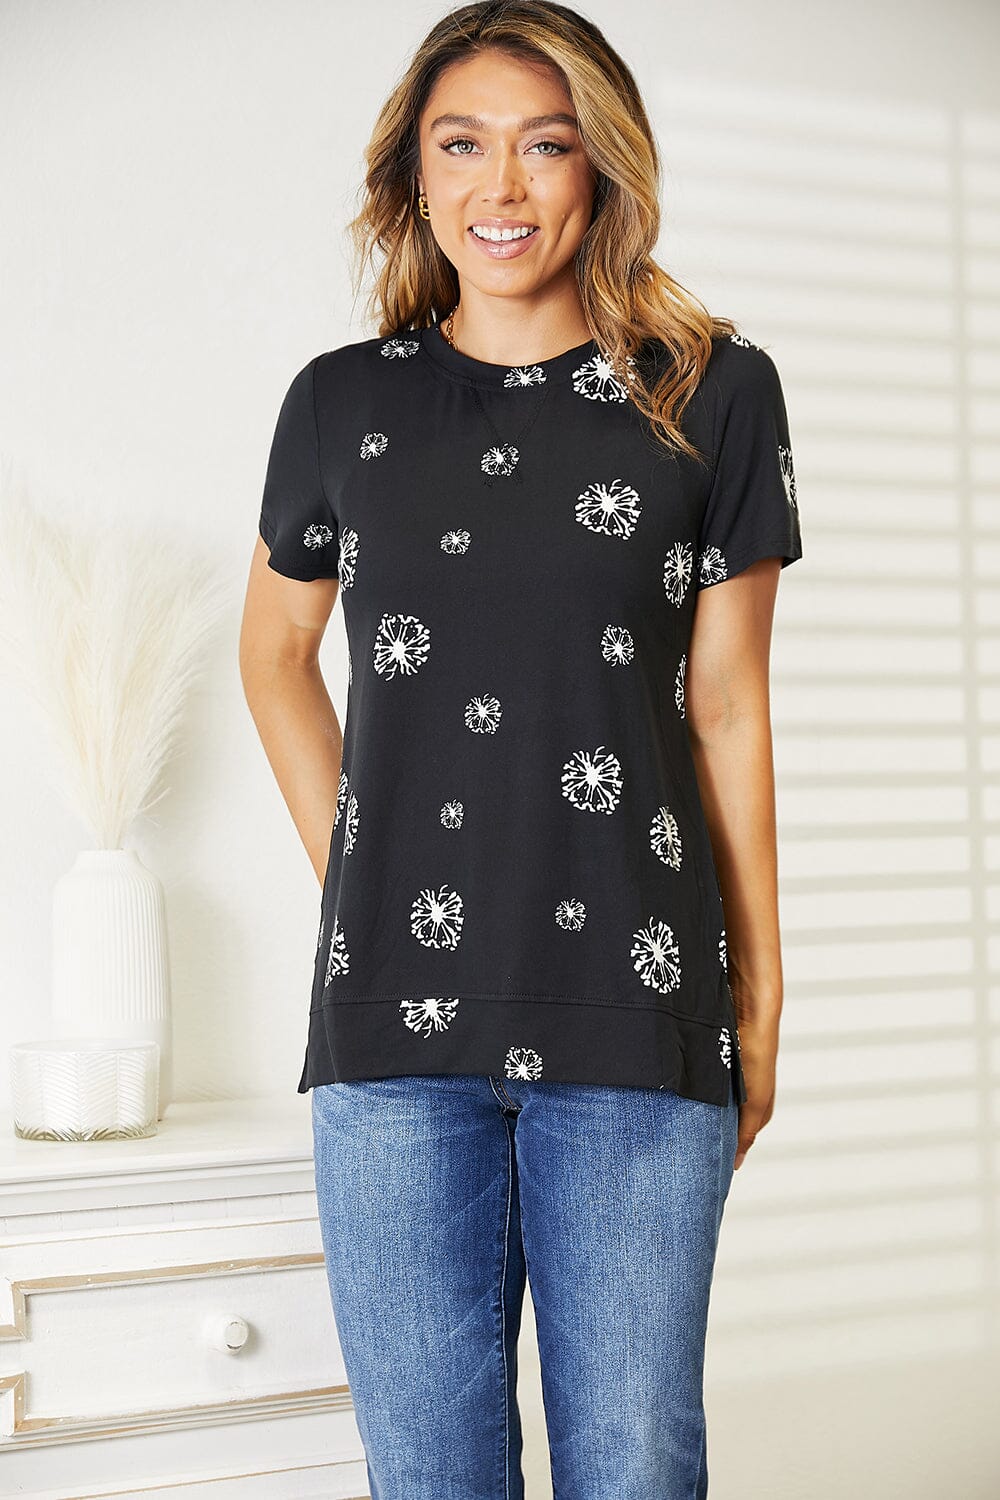 Double Take Black Dandelion Print Round Neck T-Shirt Top Shirts & Tops jehouze 